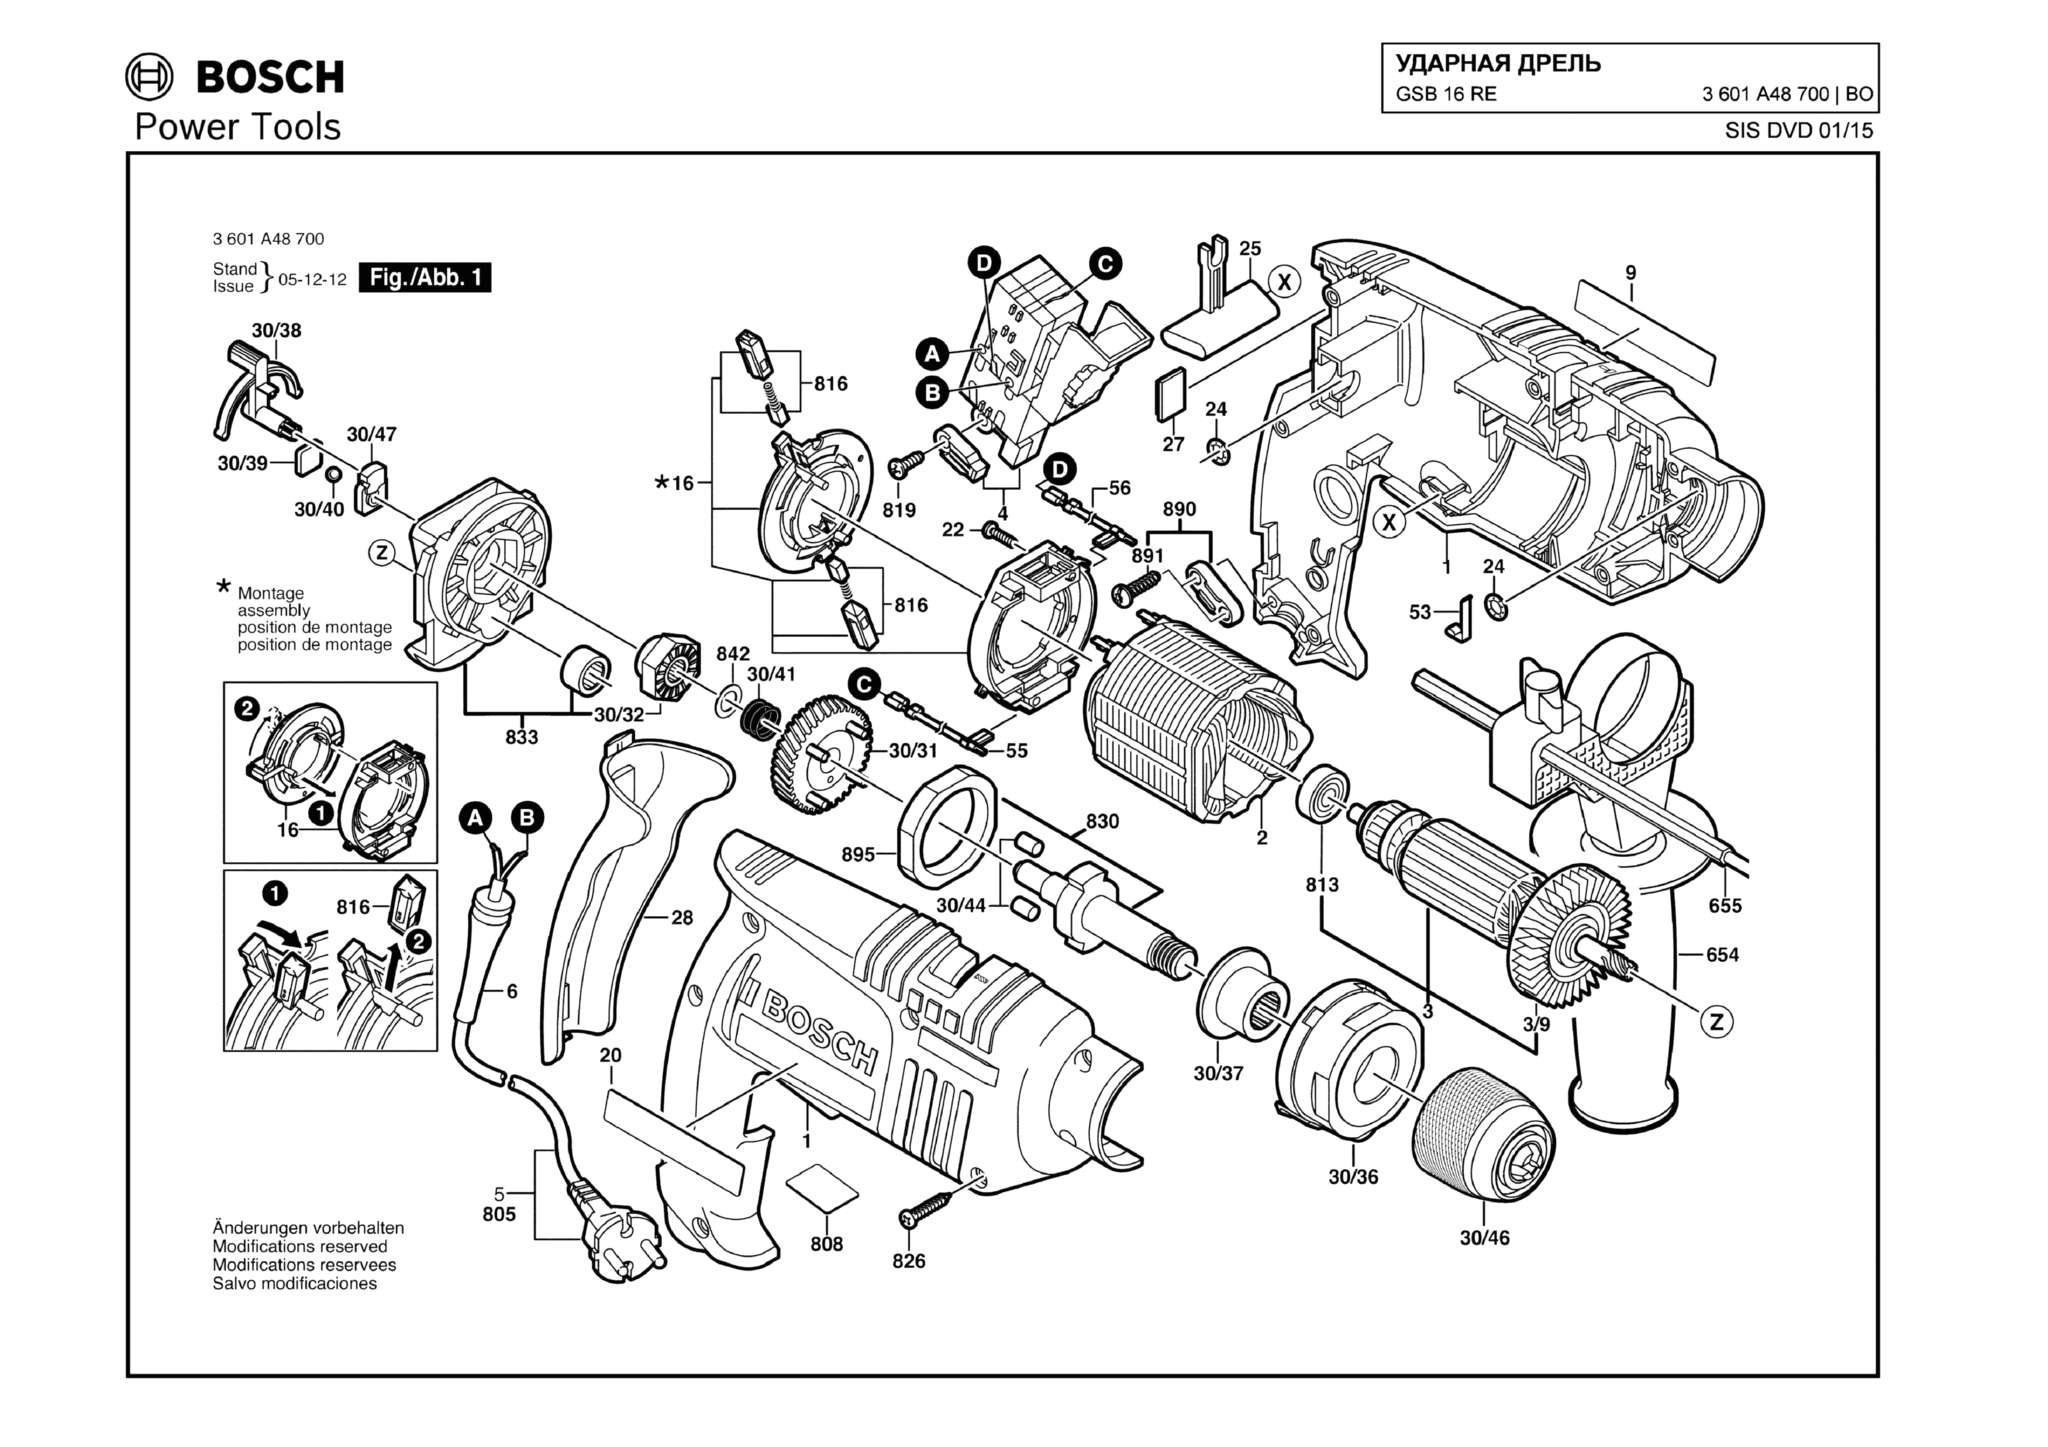 Запчасти, схема и деталировка Bosch GSB 16 RE (ТИП 3601A48700)